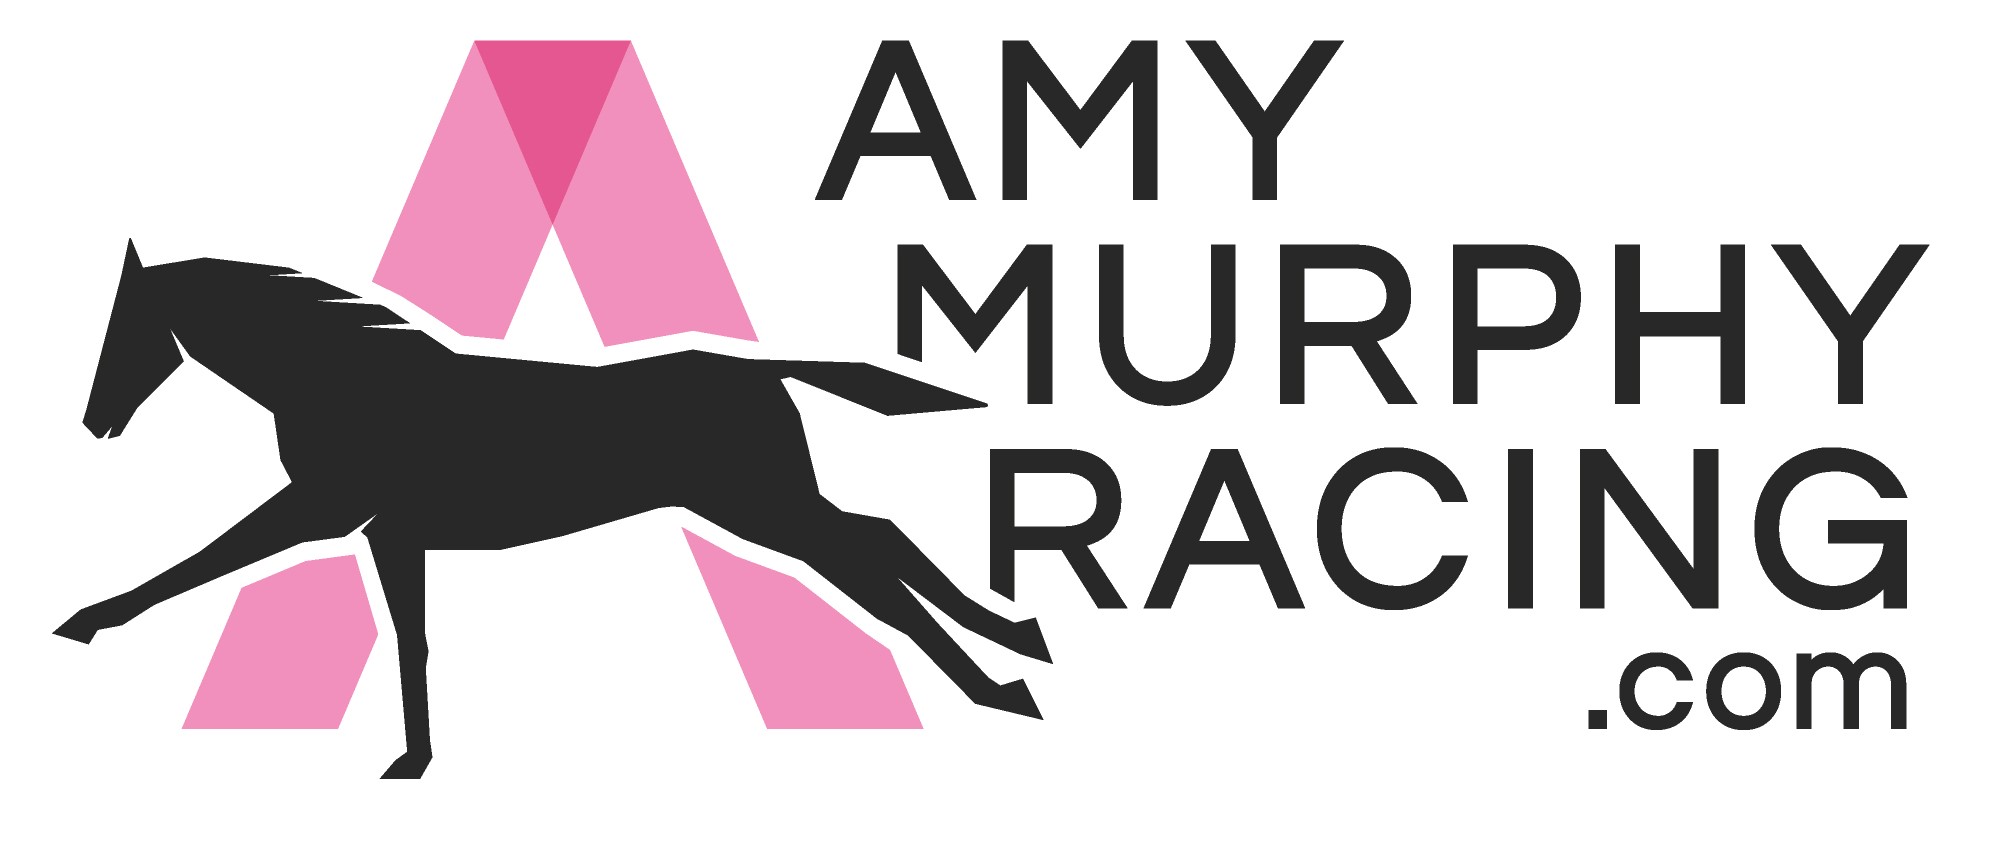 Amy Murphy Racing logo